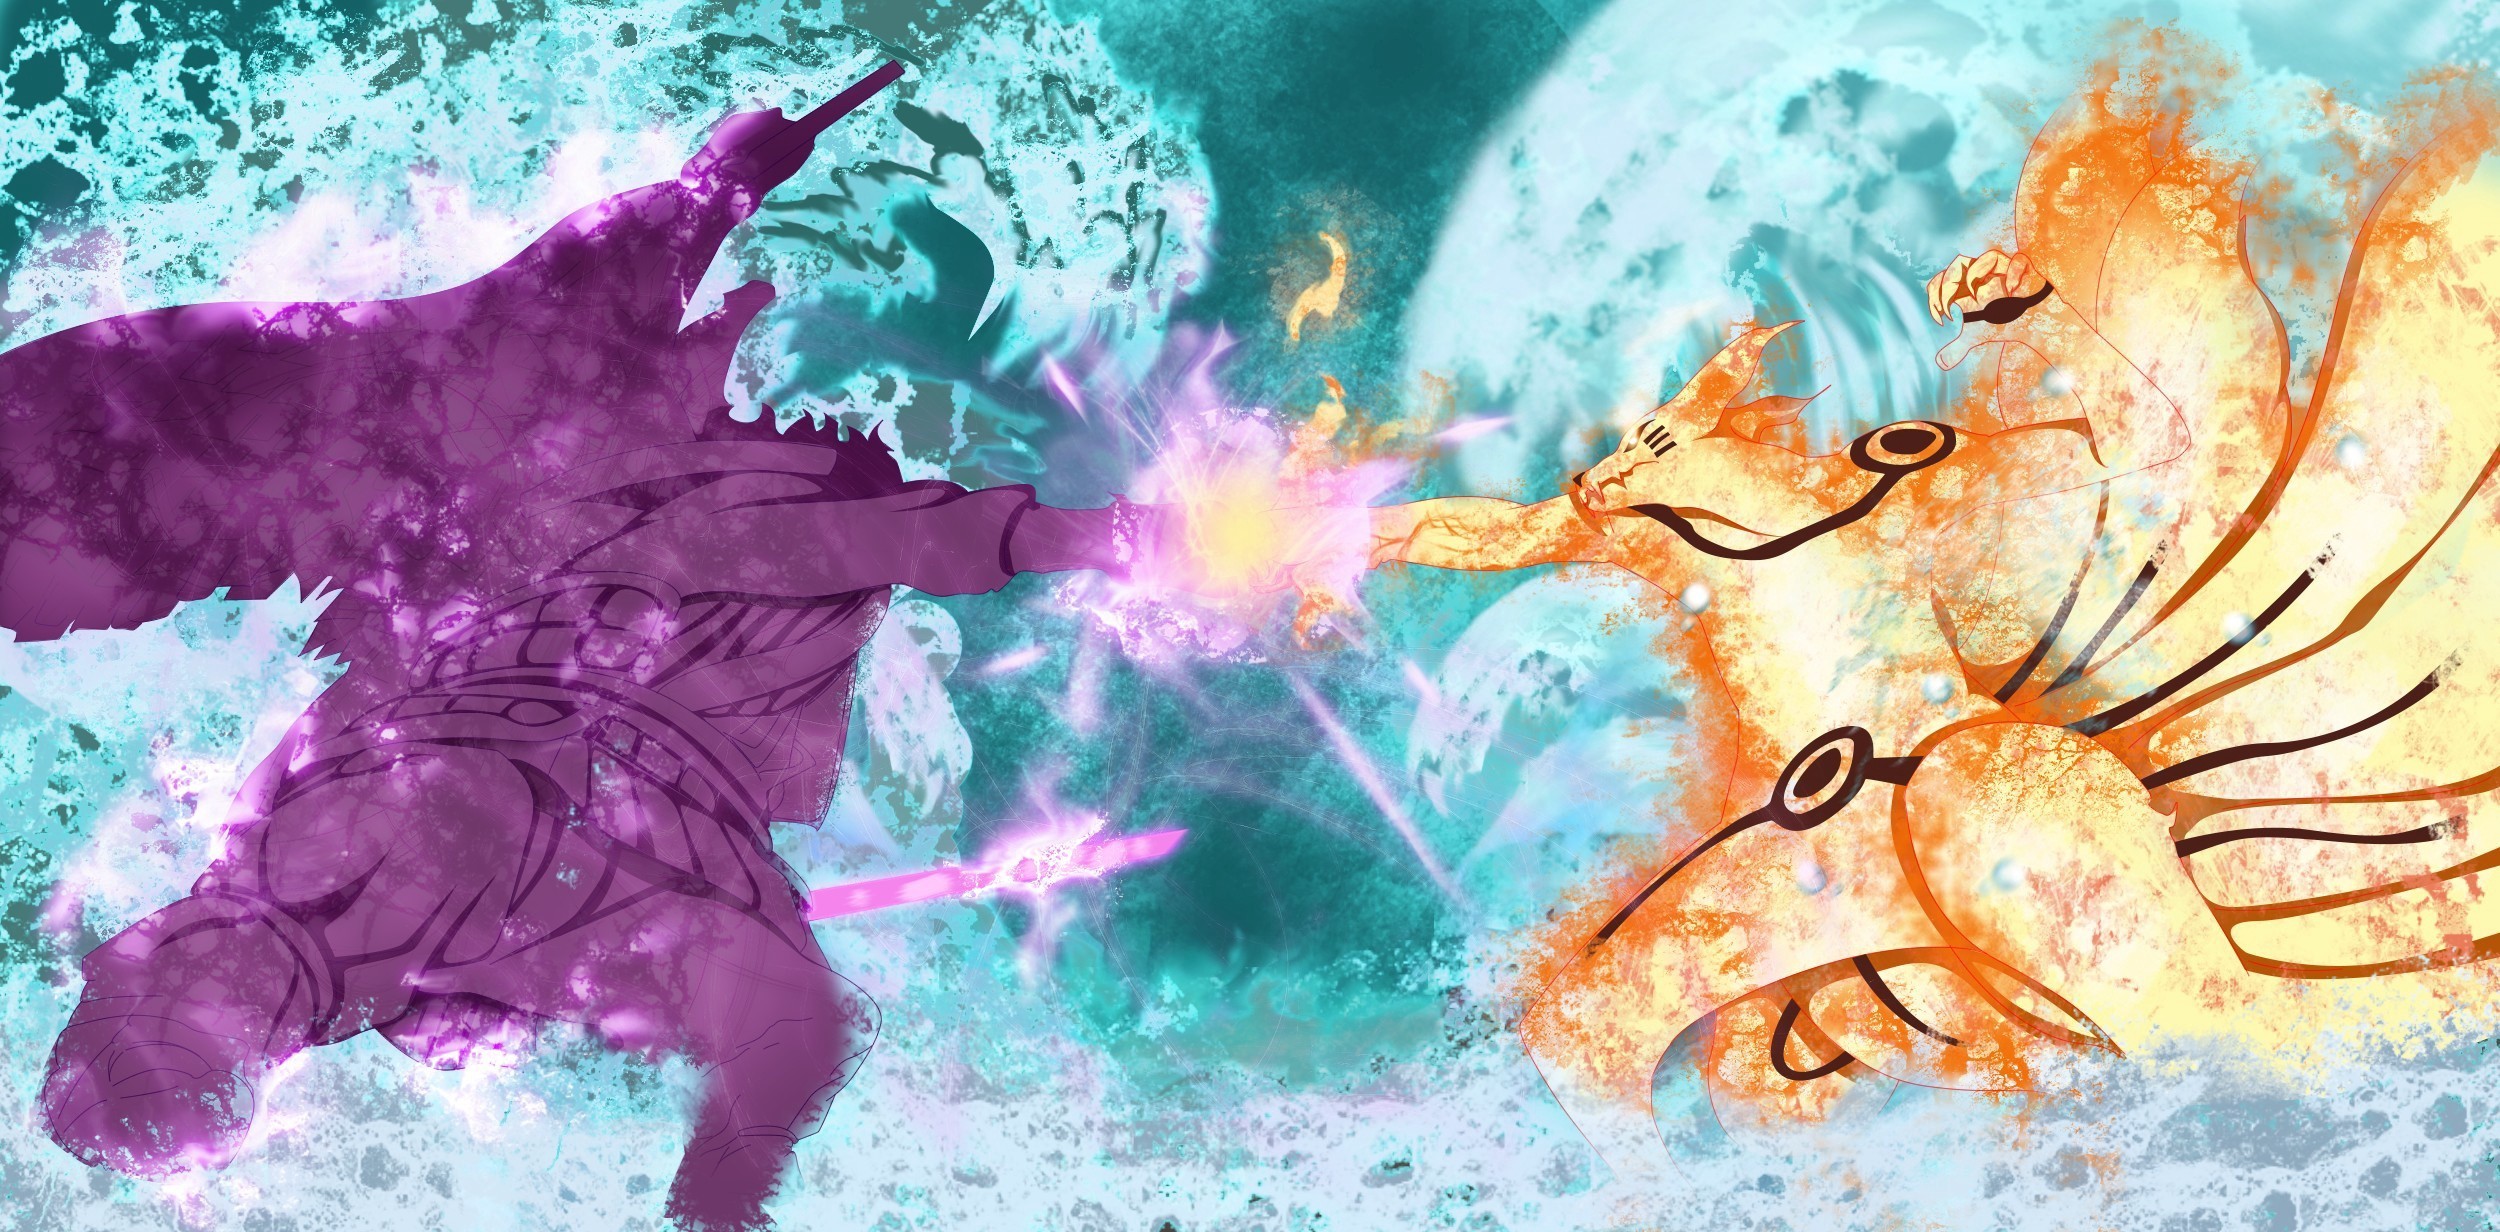 Naruto vs Sasuke Wallpapers (60+ pictures)